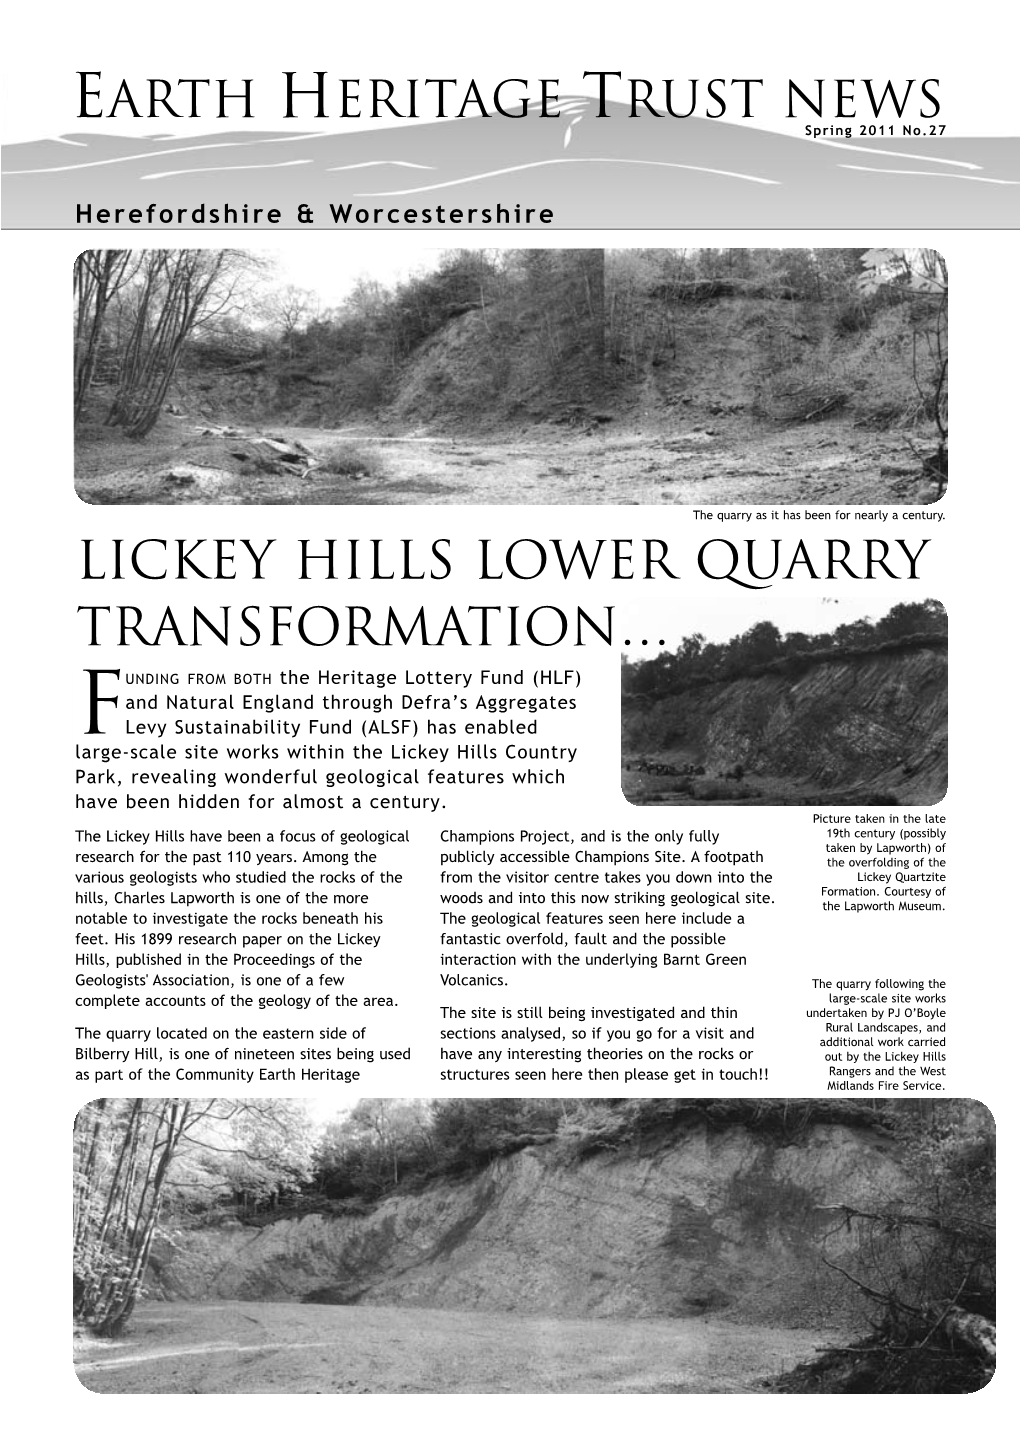 Lickey Hills Lower Quarry Transformation…